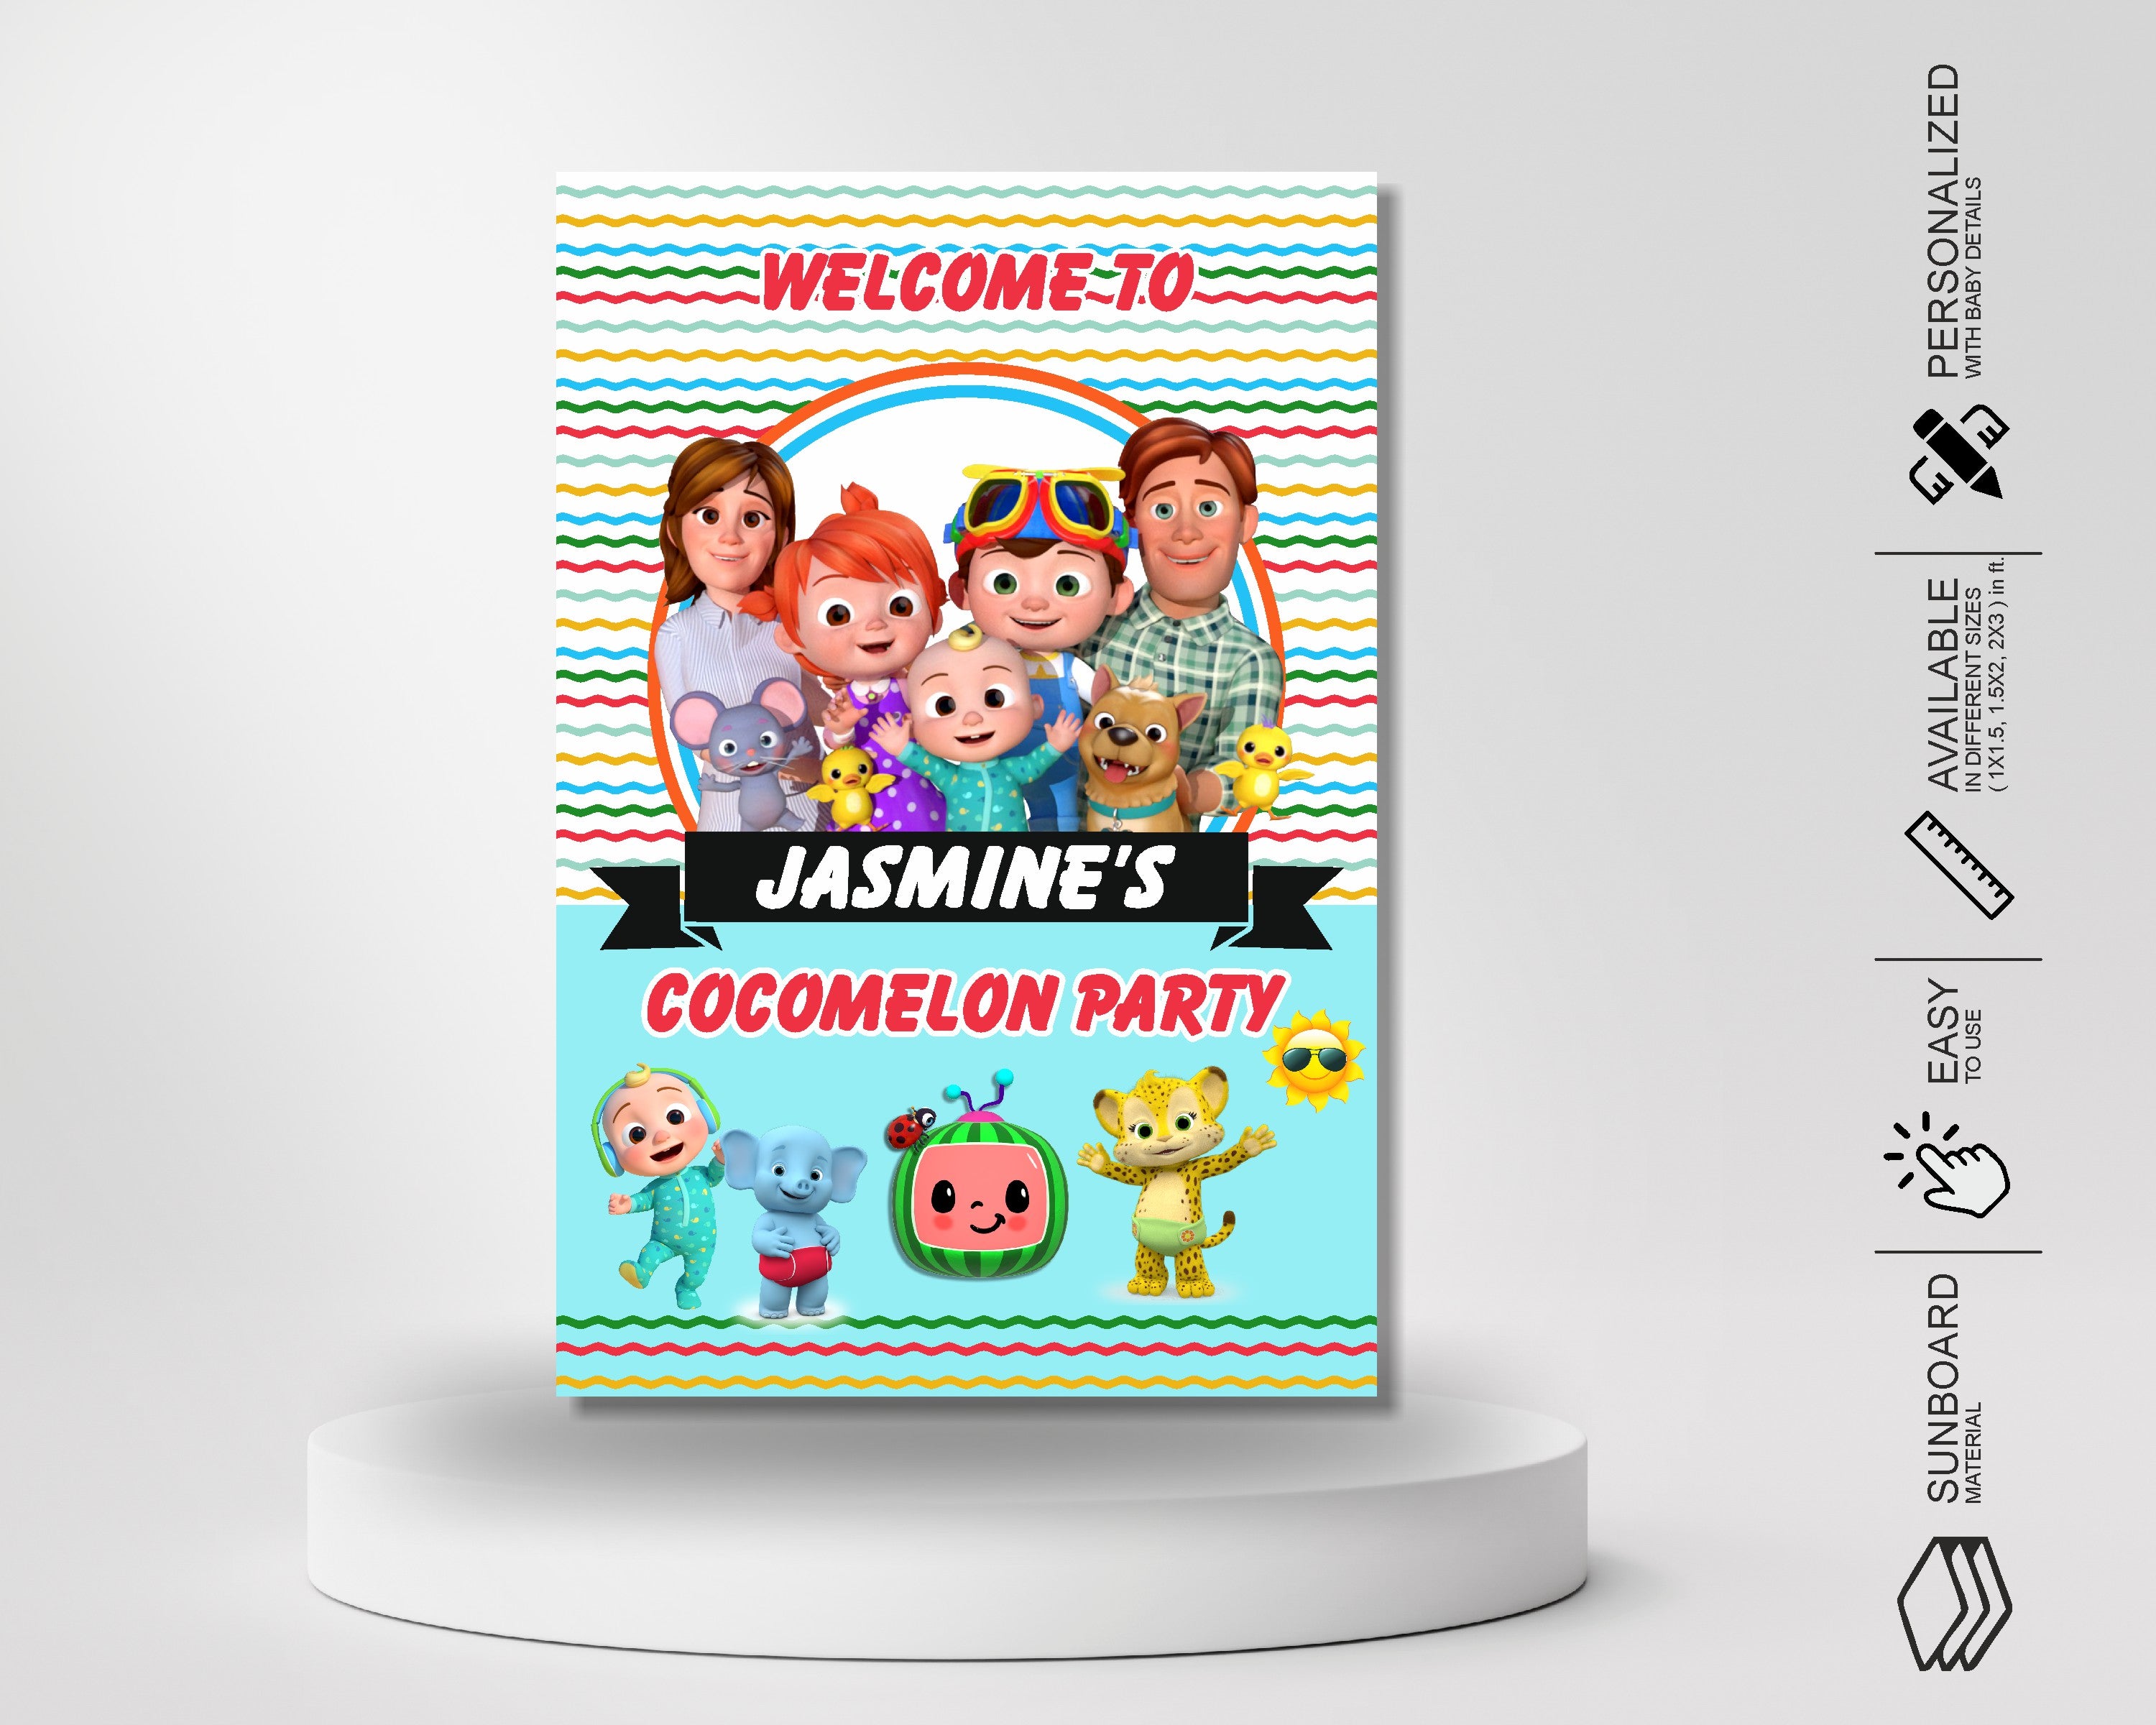 PSI Coco Melon Theme Girl Personalized Welcome Board